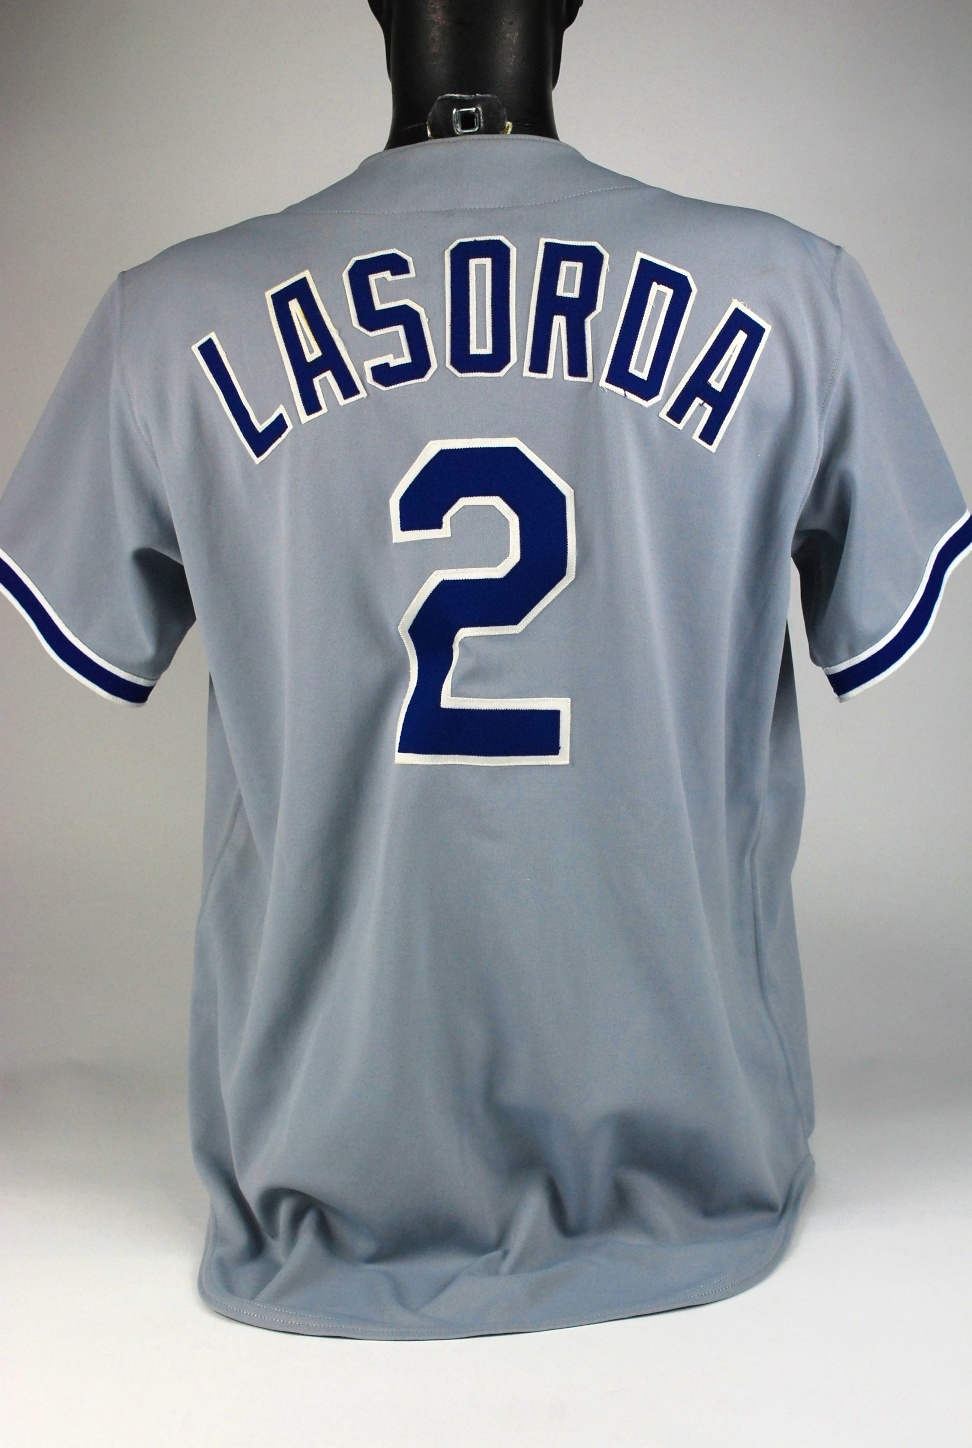 Lot Detail - Tom Lasorda 1988-89 Game Used & Autographed LA Dodgers Jersey  GU 8.5